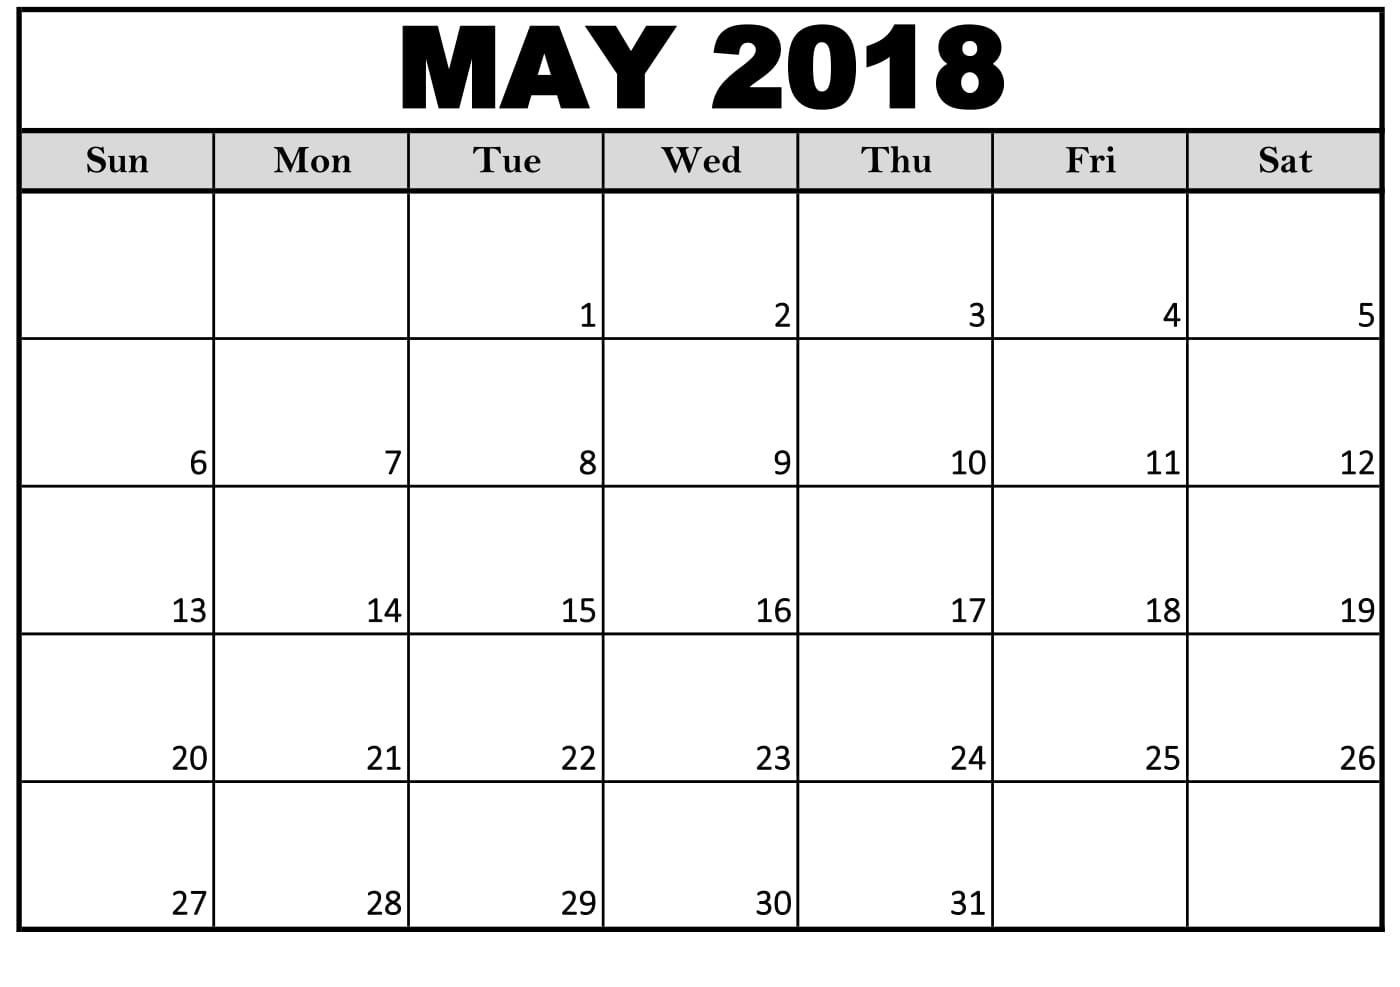 May 2018 calendar 2018 Printable calendars posters images wallpapers free